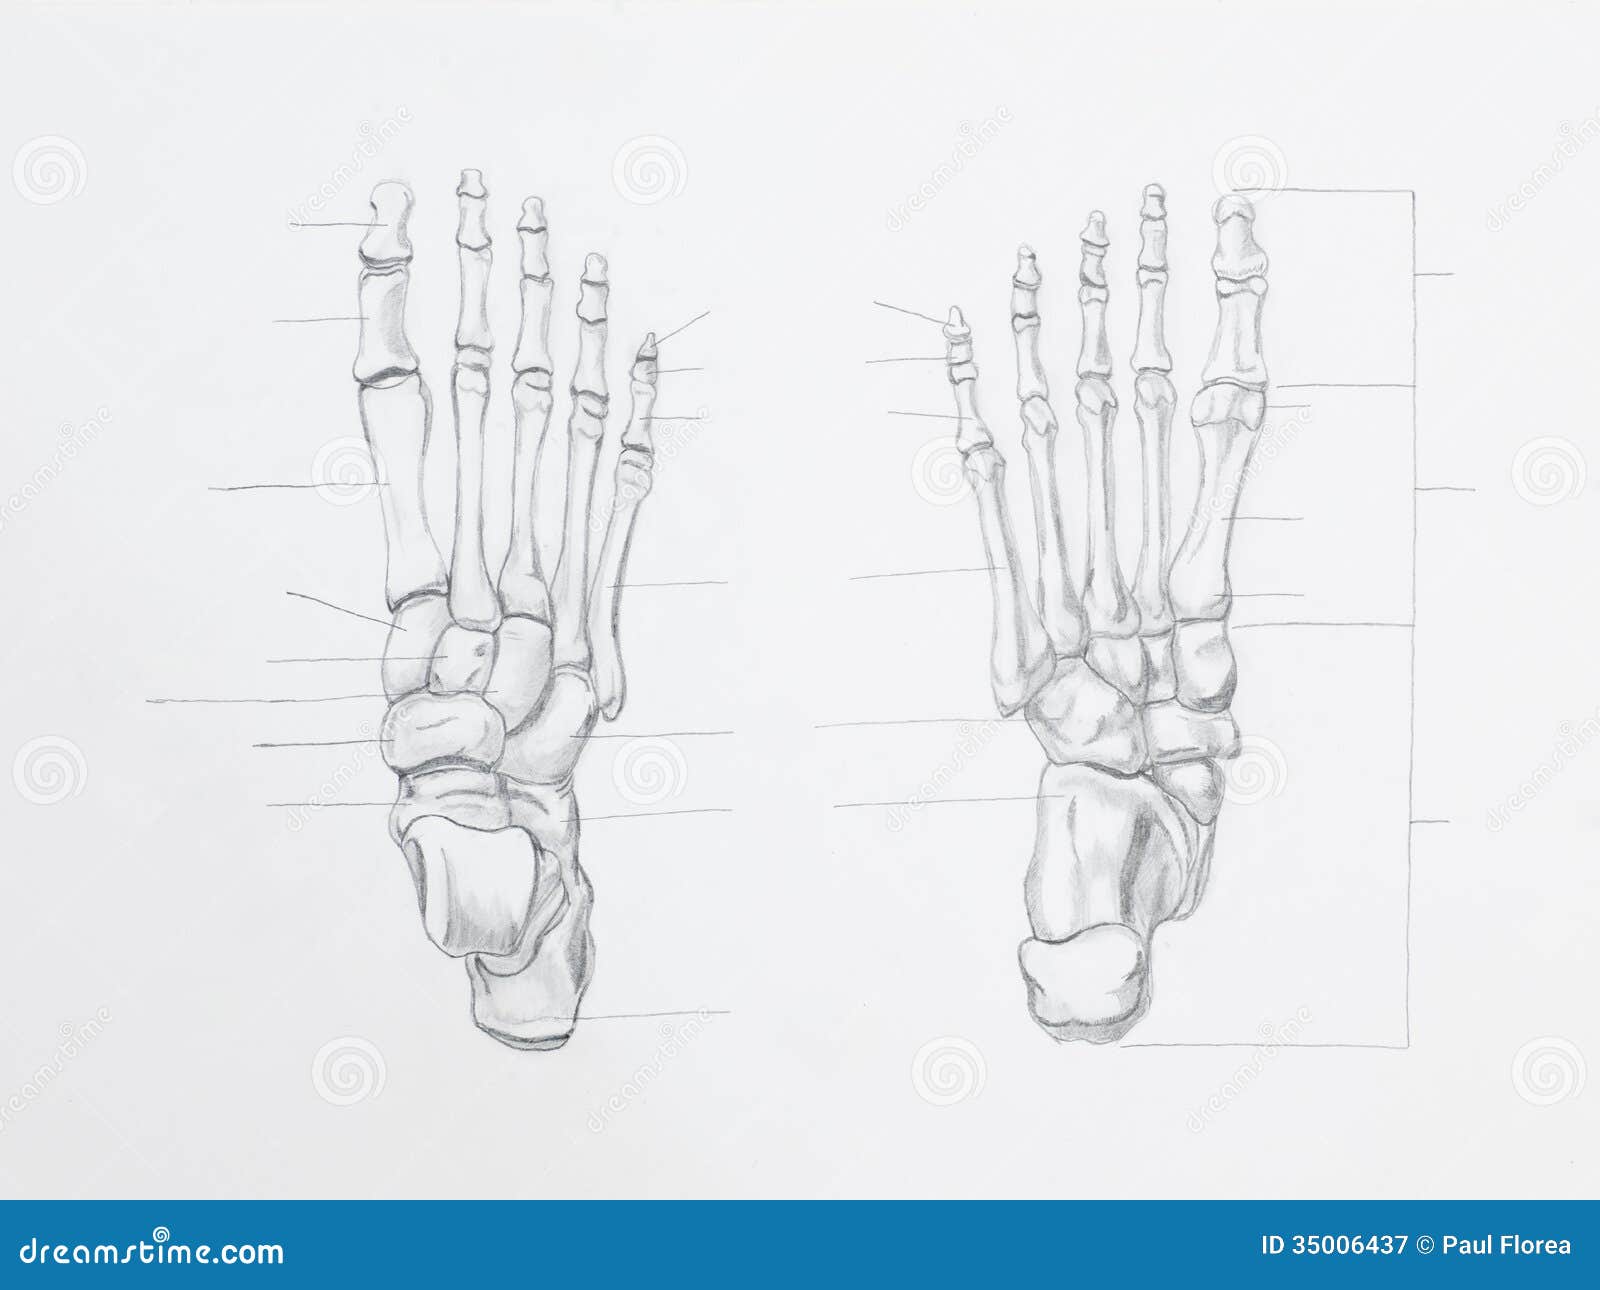 foot bones pencil drawing